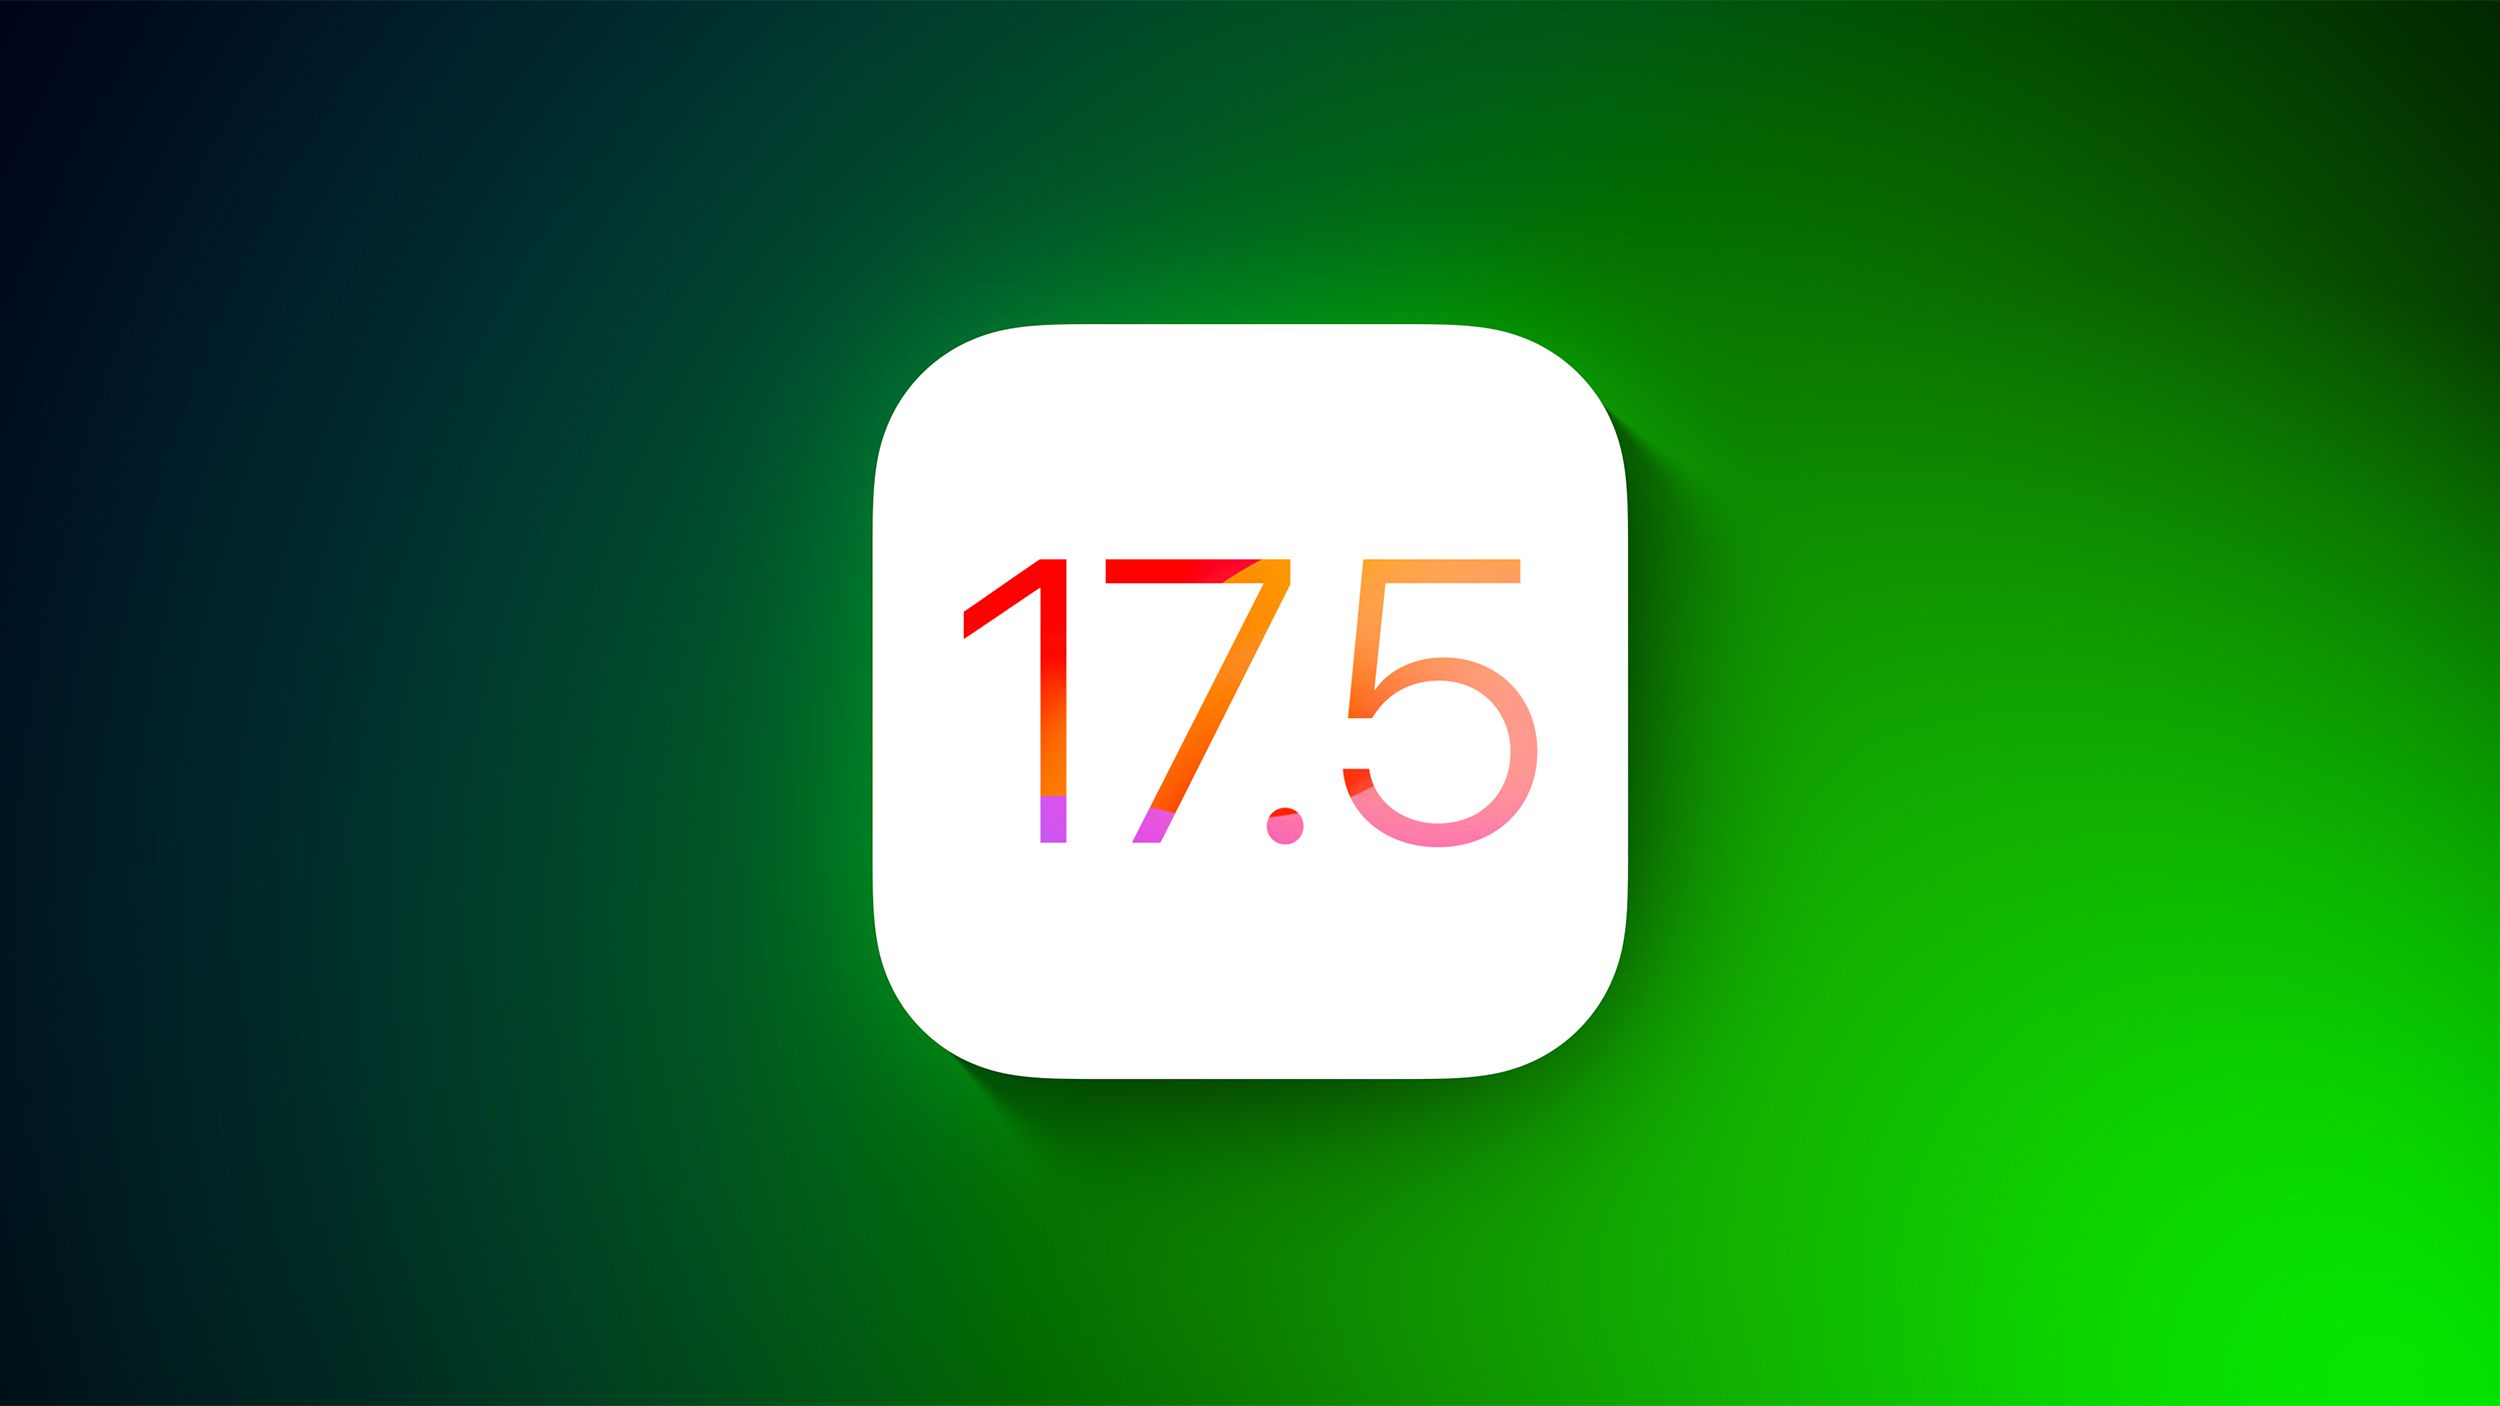 iOS 17.5 버그로 인해 판매되거나 루팅된 기기에 삭제된 사진이 나타날 수도 있습니다.